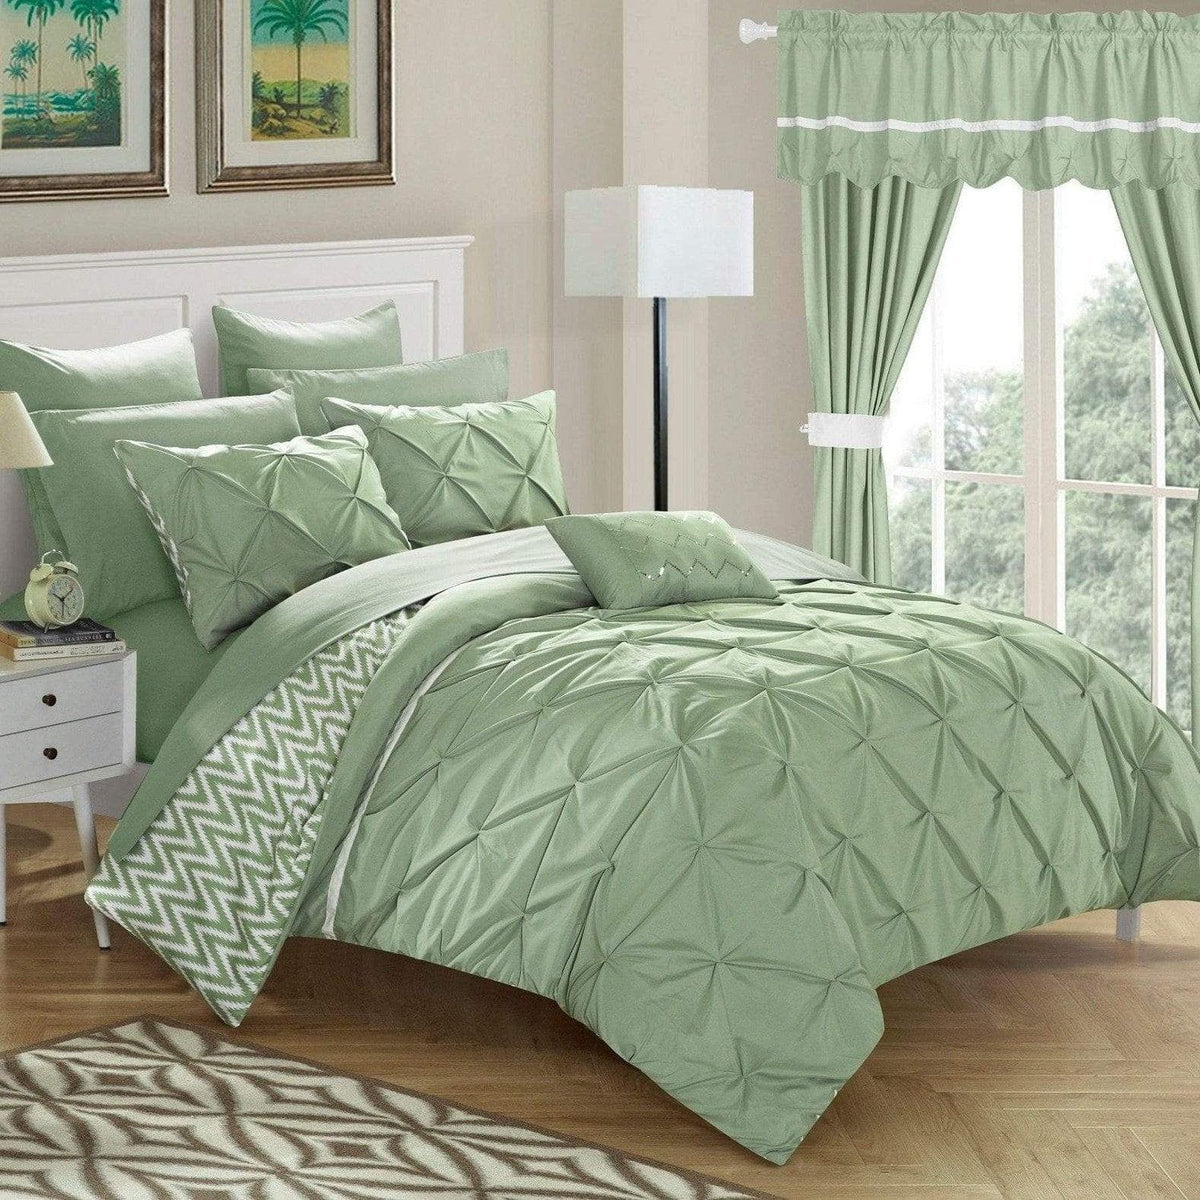 Chic Home Jacksonville 20 Piece Reversible Comforter Set Green